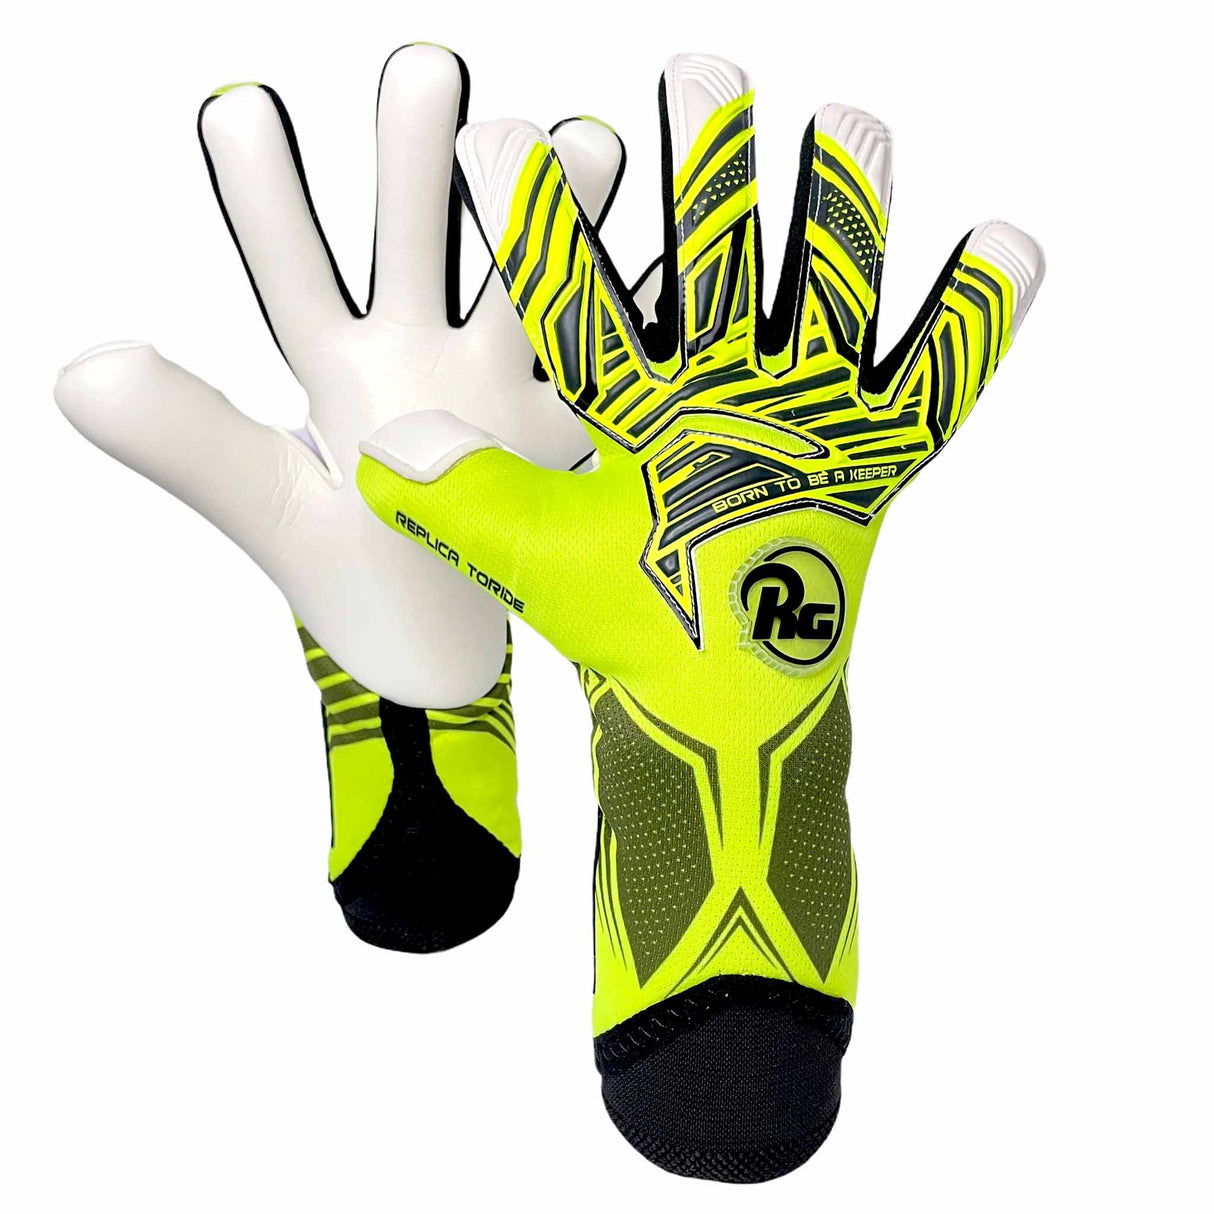 RG Goalkeeper gloves Toride Replica gants de gardien de but de soccer paire jaune